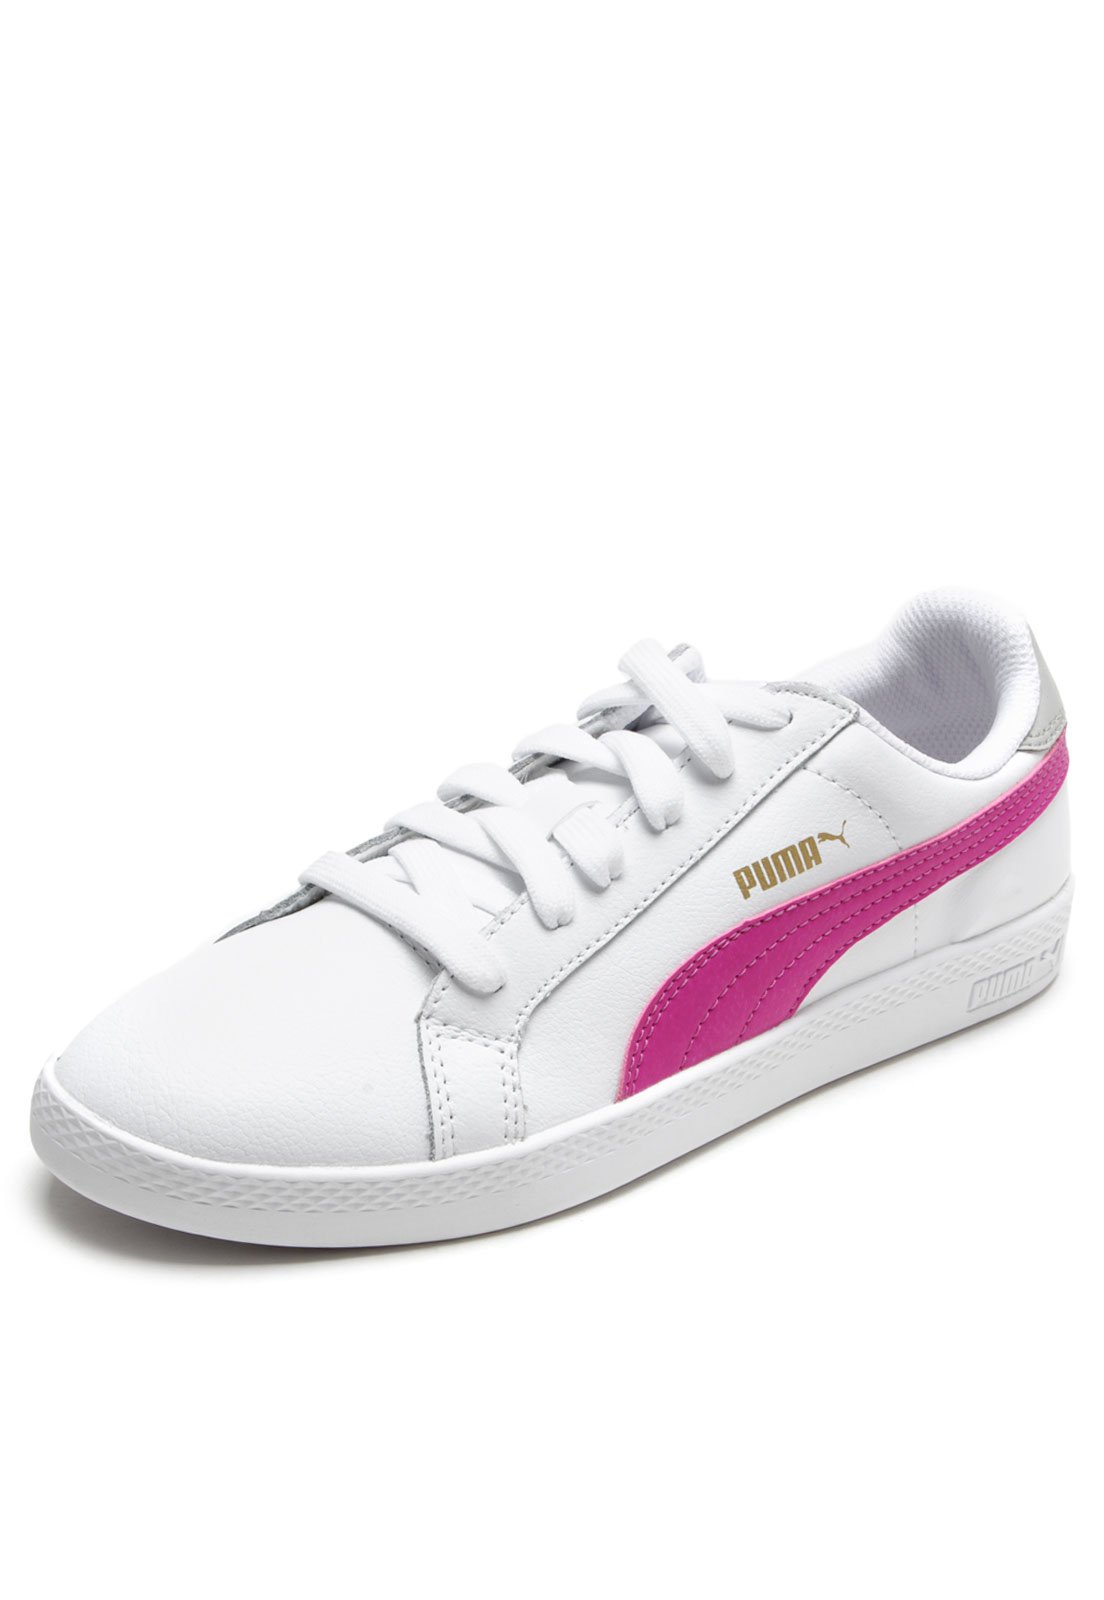 tenis puma rosa e branco